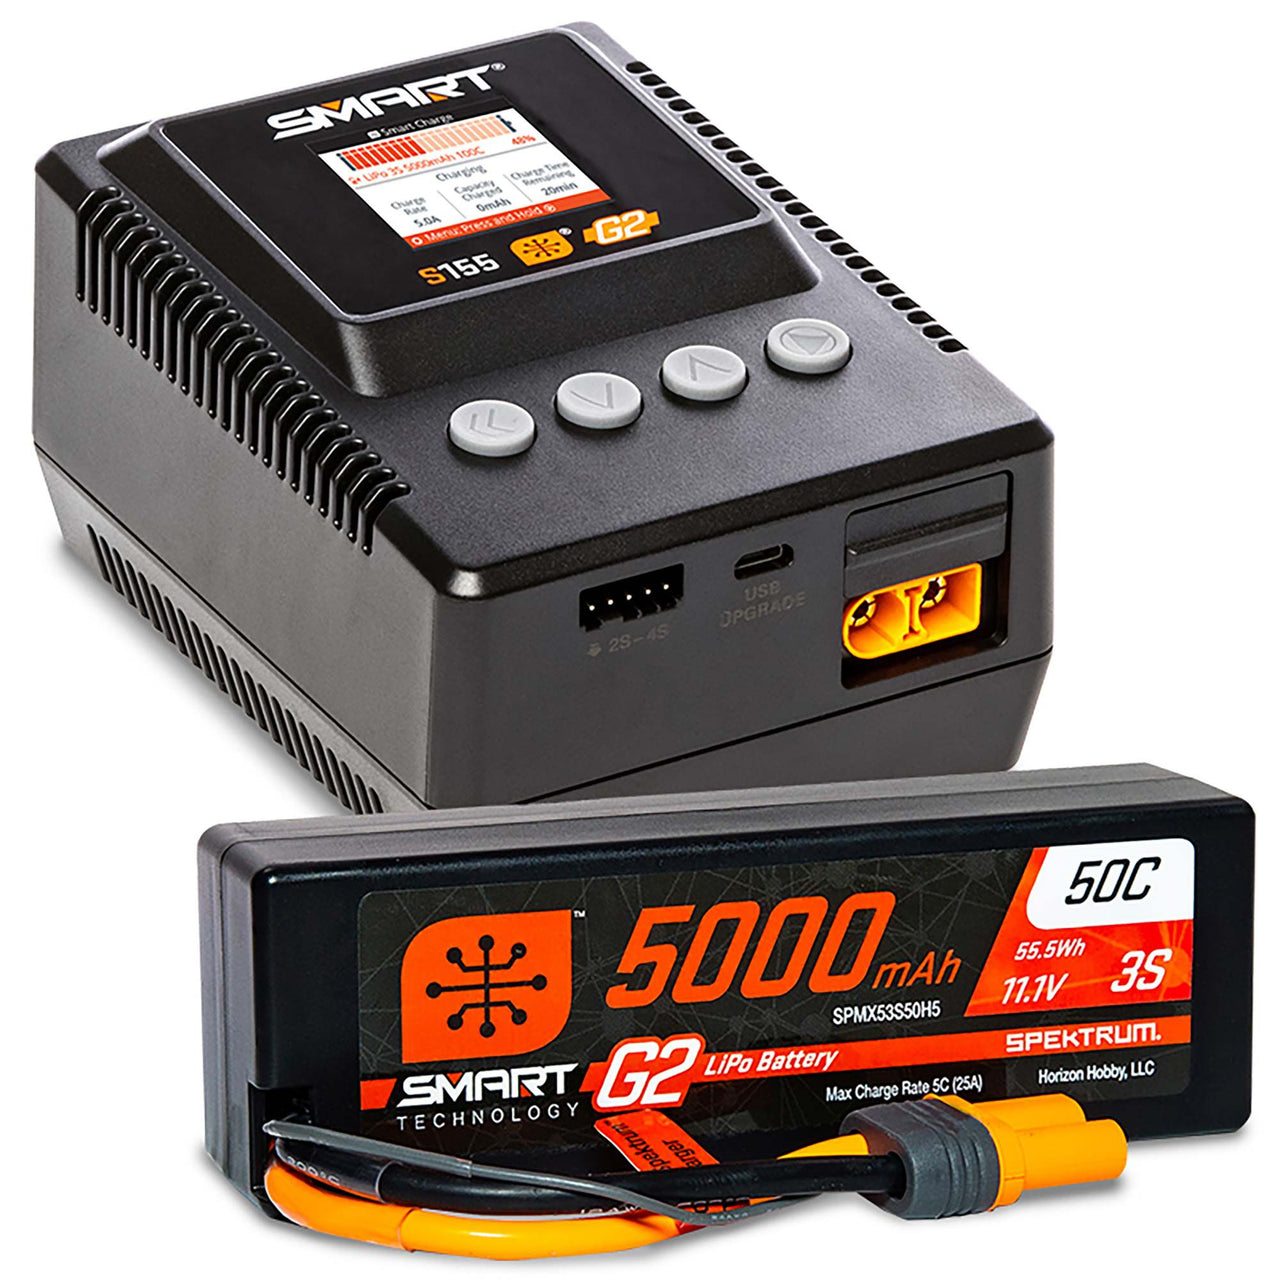 Paquete de superficie Smart Powerstage SPMXPSS300: batería LiPo 3S de 5000 mAh / cargador S155 